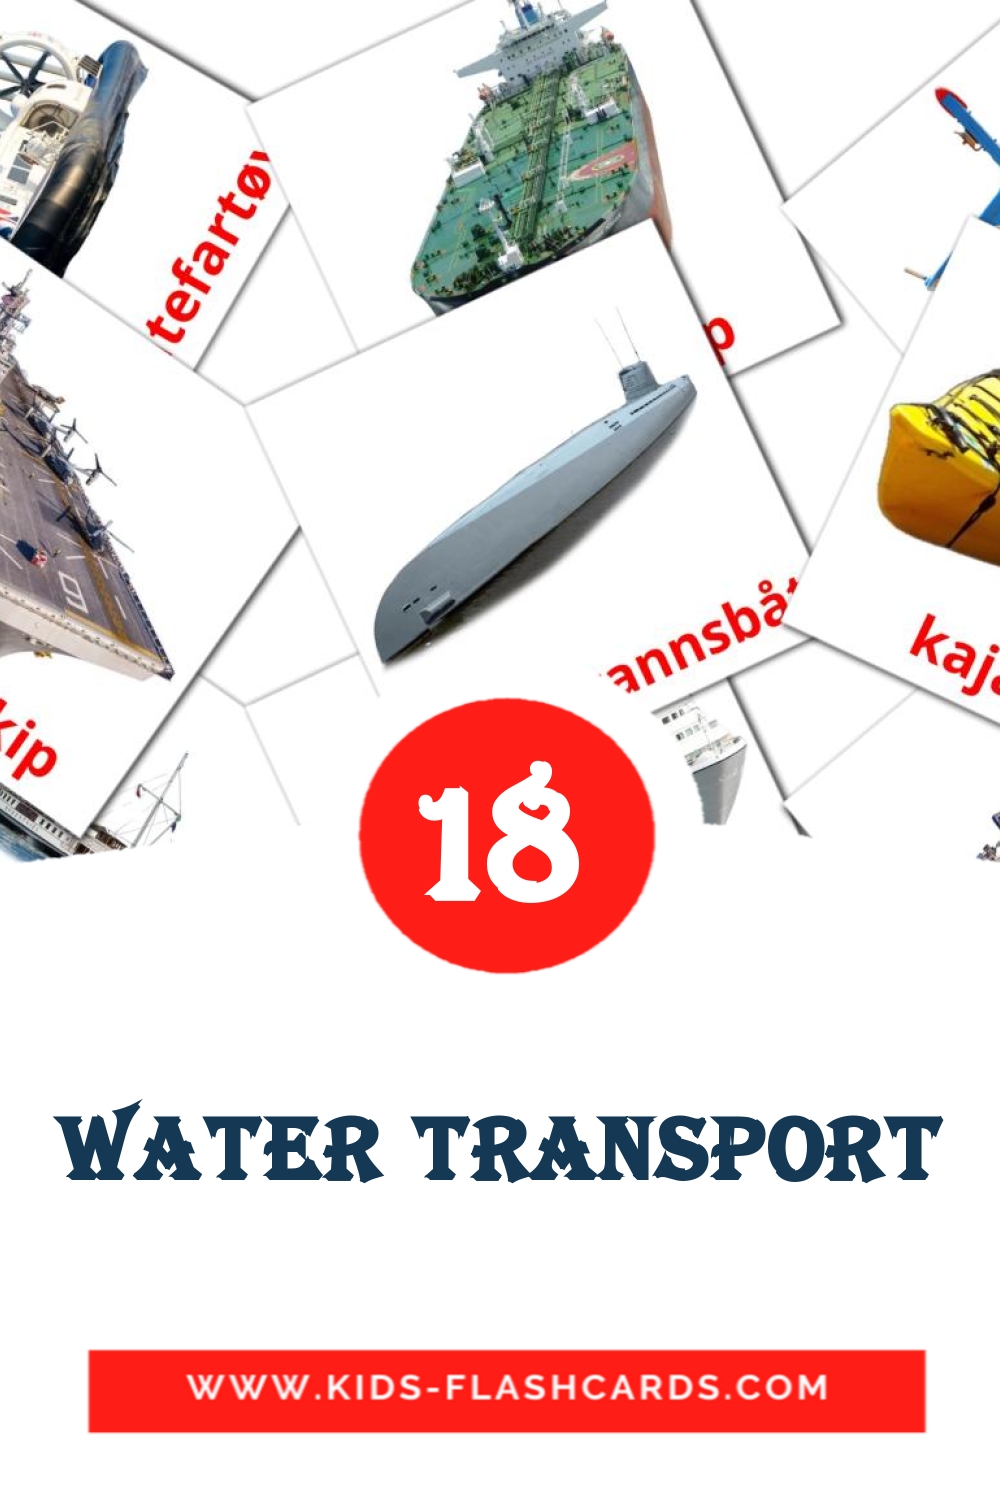 18 carte illustrate di Water transport per la scuola materna in norvegese